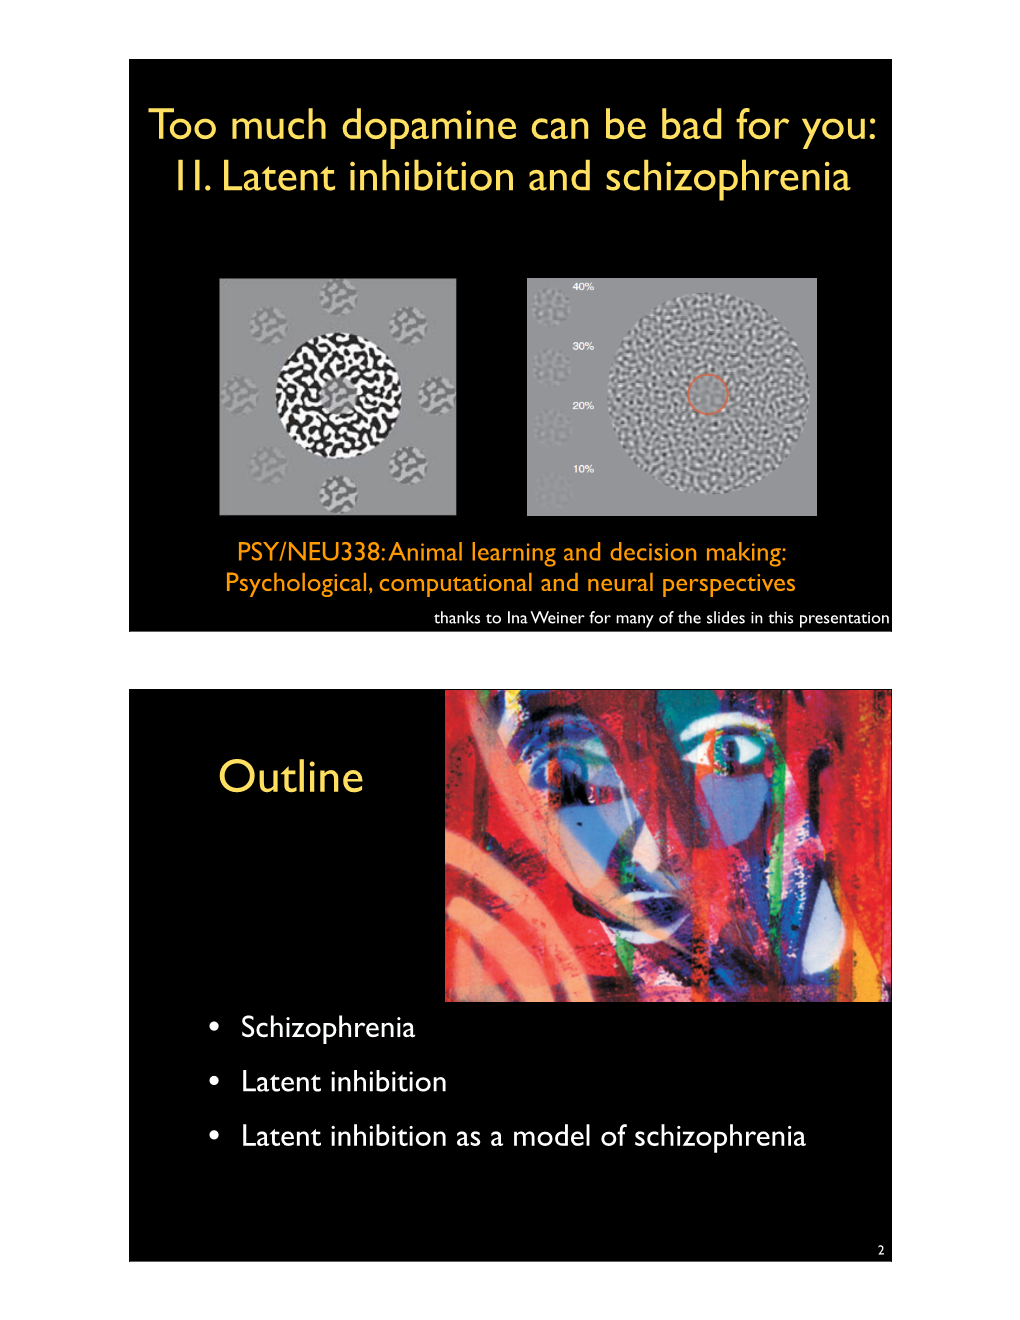 1I. Latent Inhibition and Schizophrenia